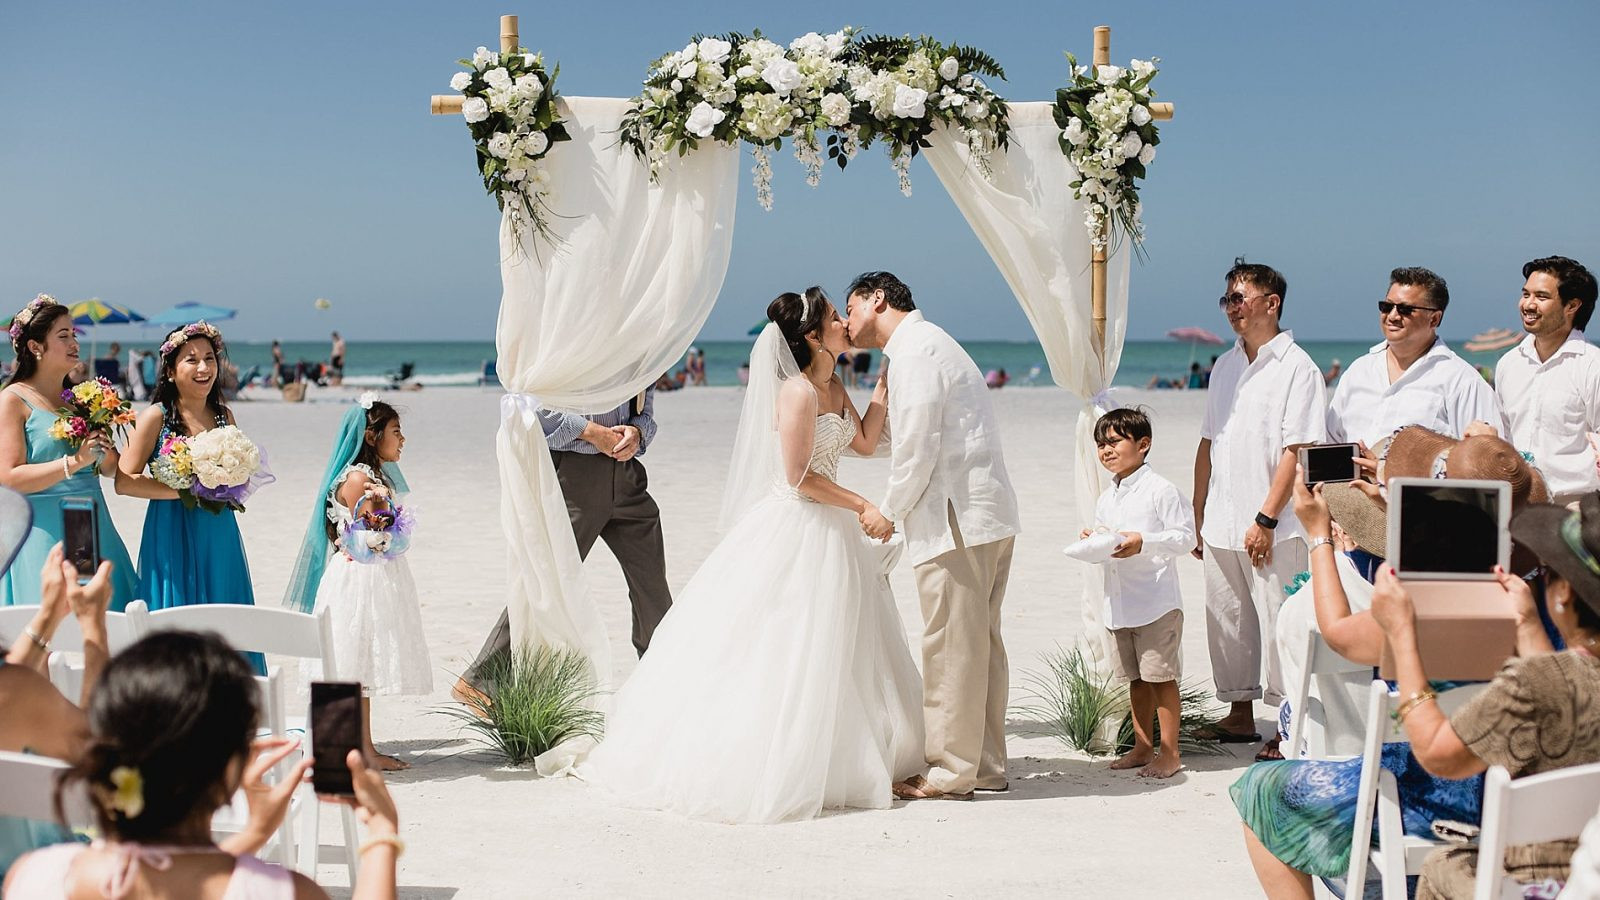 Sarasota Beach Weddings
 An Intimate Siesta Key Beach Destination Wedding